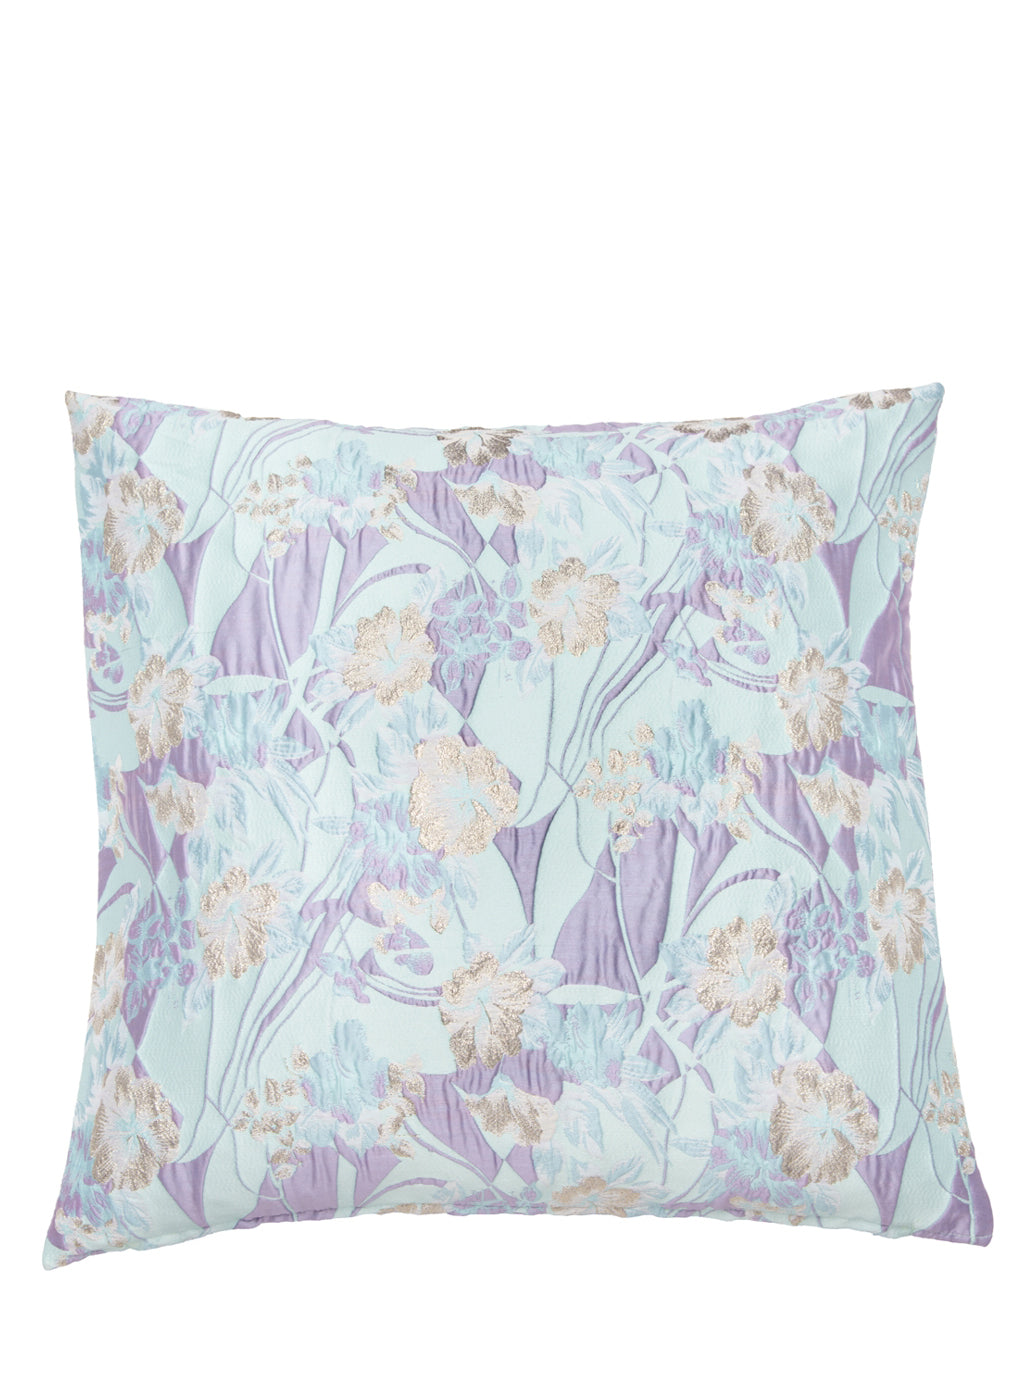 Floral cushion, light blue/lavender